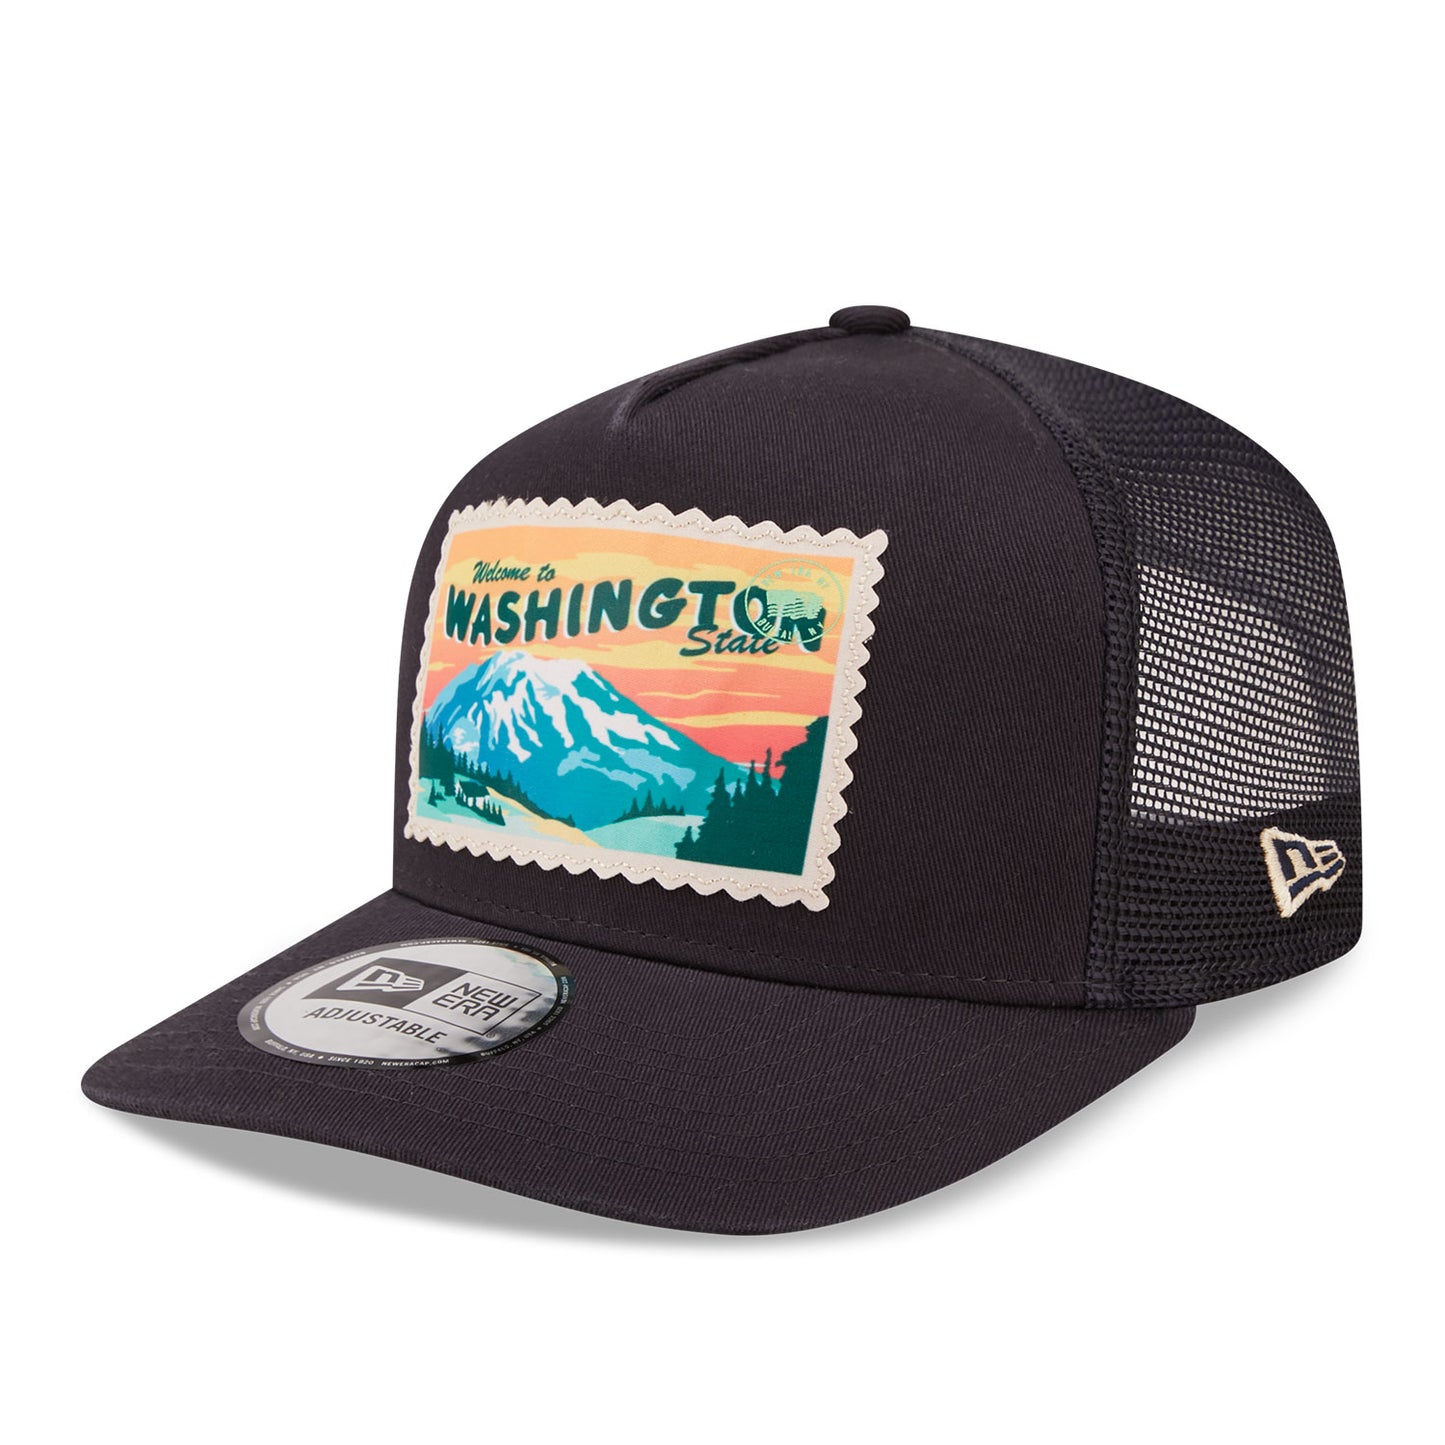 Washington State Stamp New Era Trucker Cap Adjustable